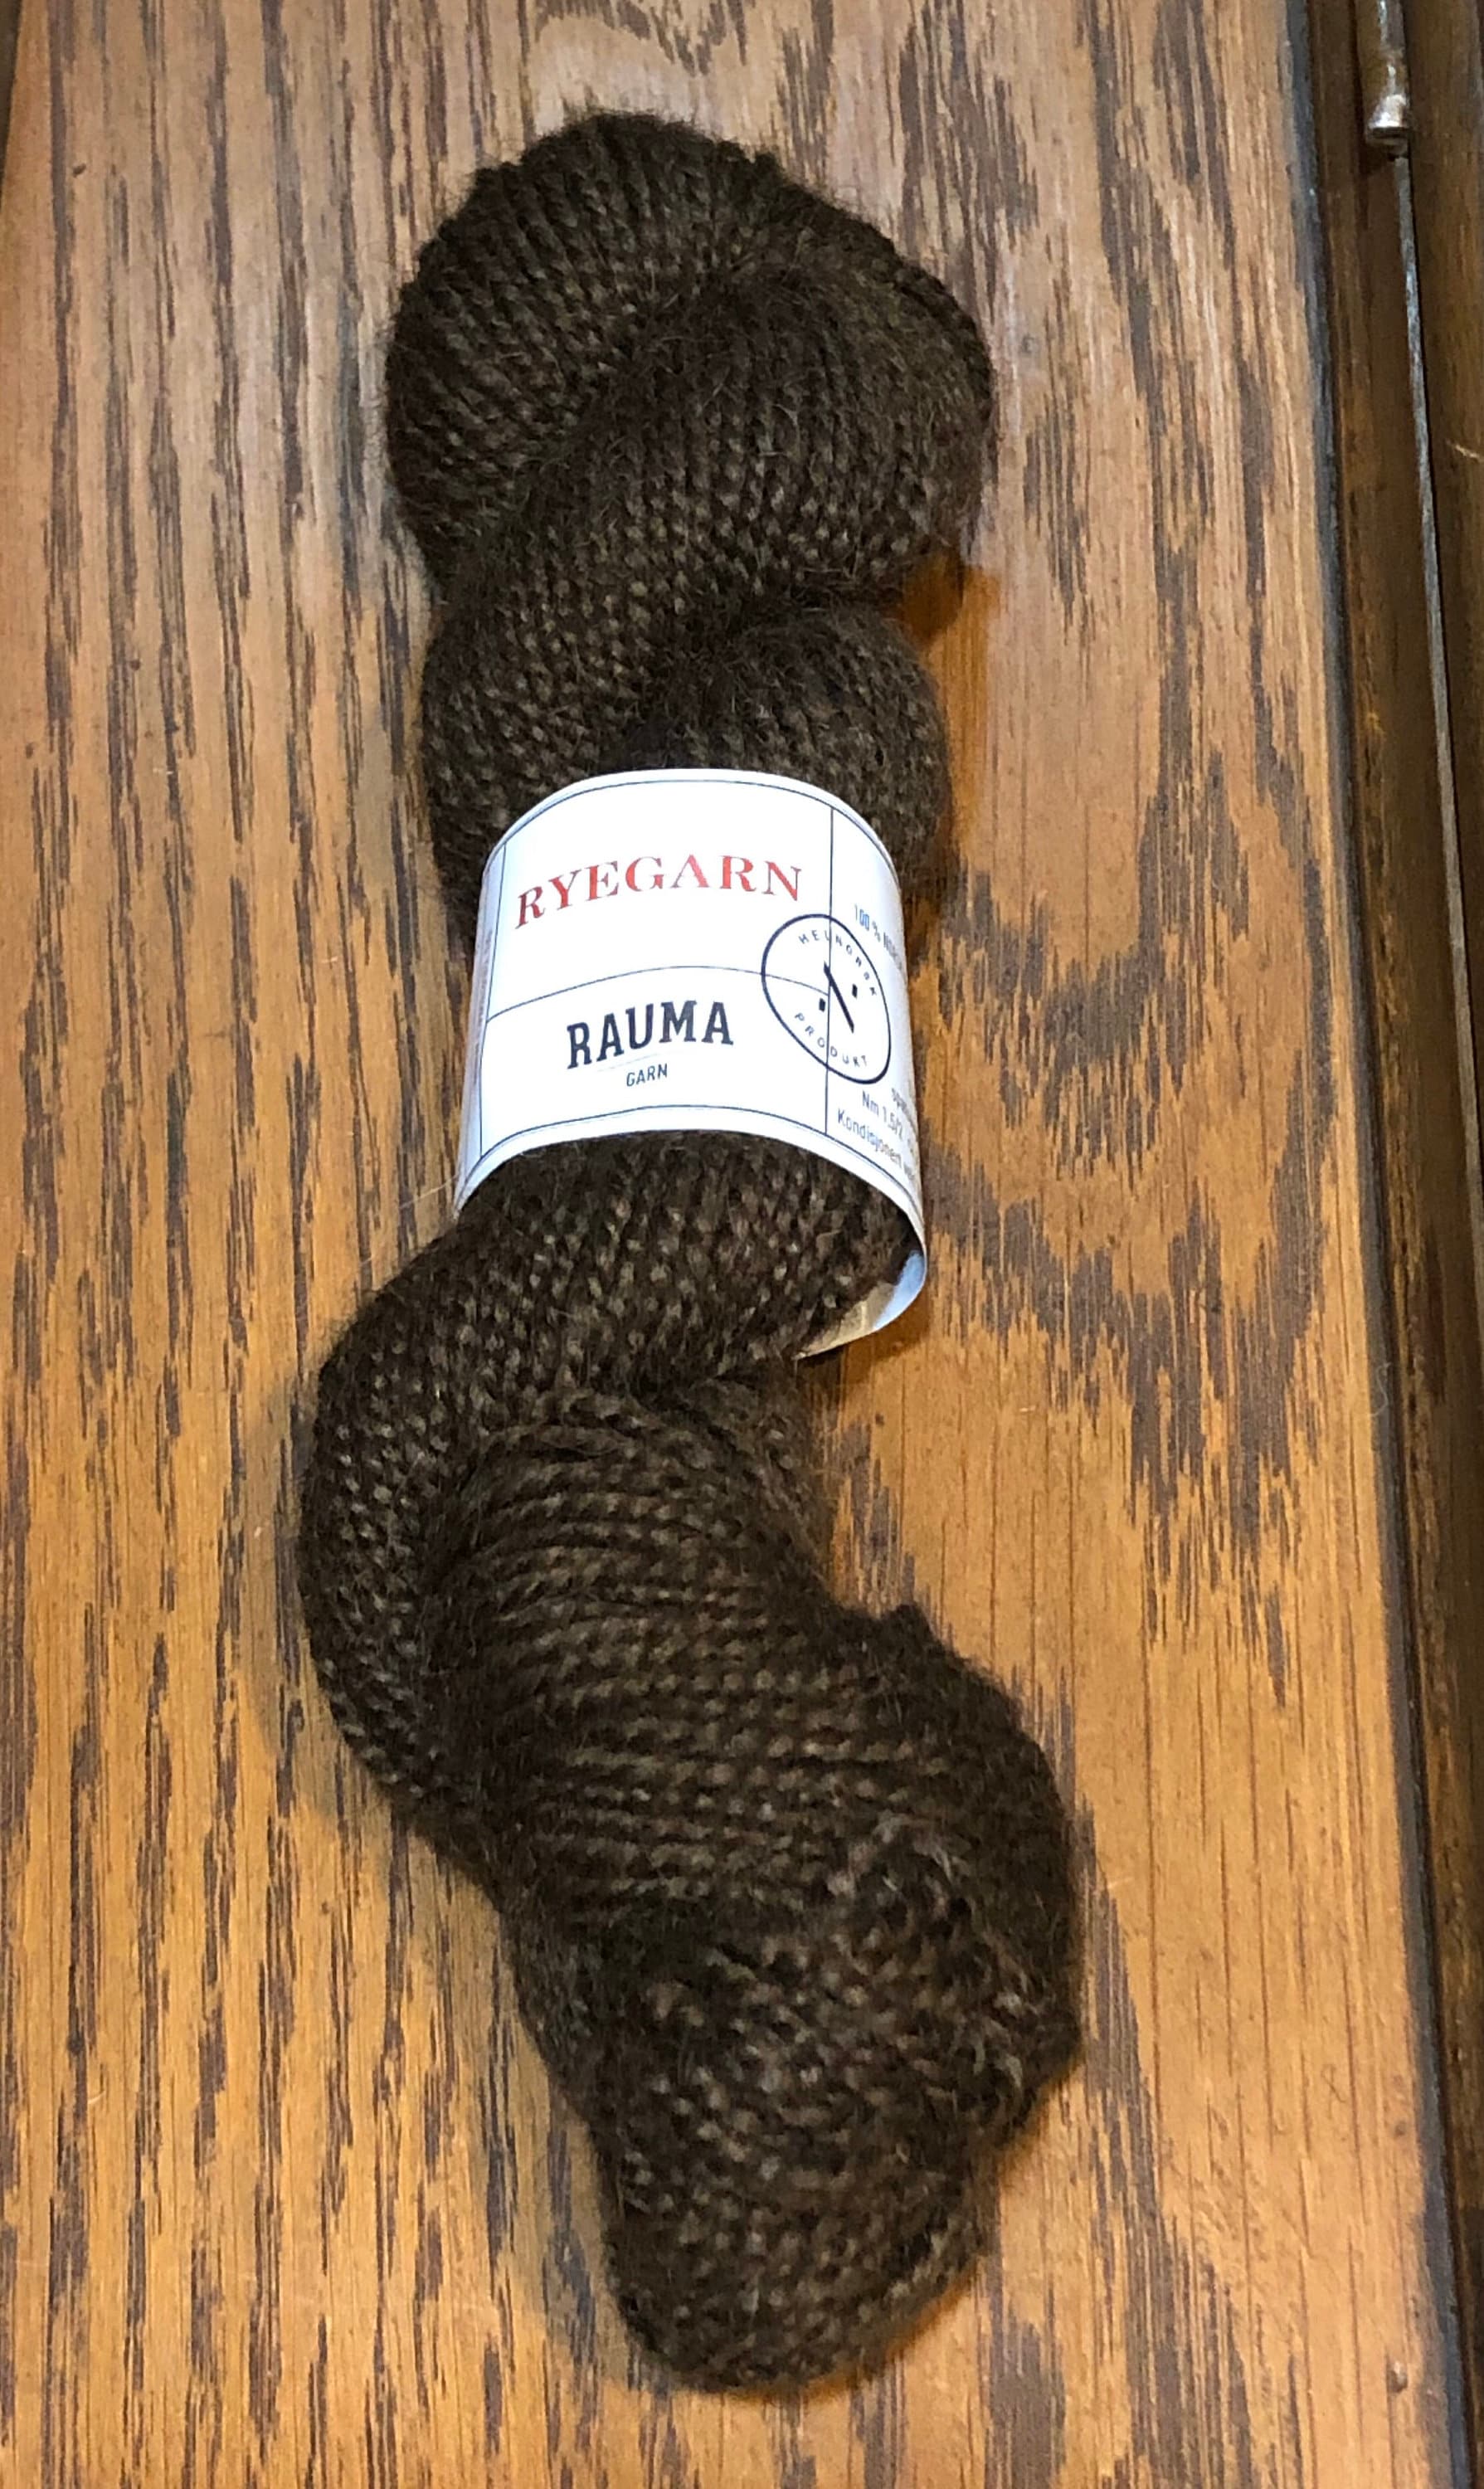 Rauma Ryegarn - Norwegian Rug Yarn